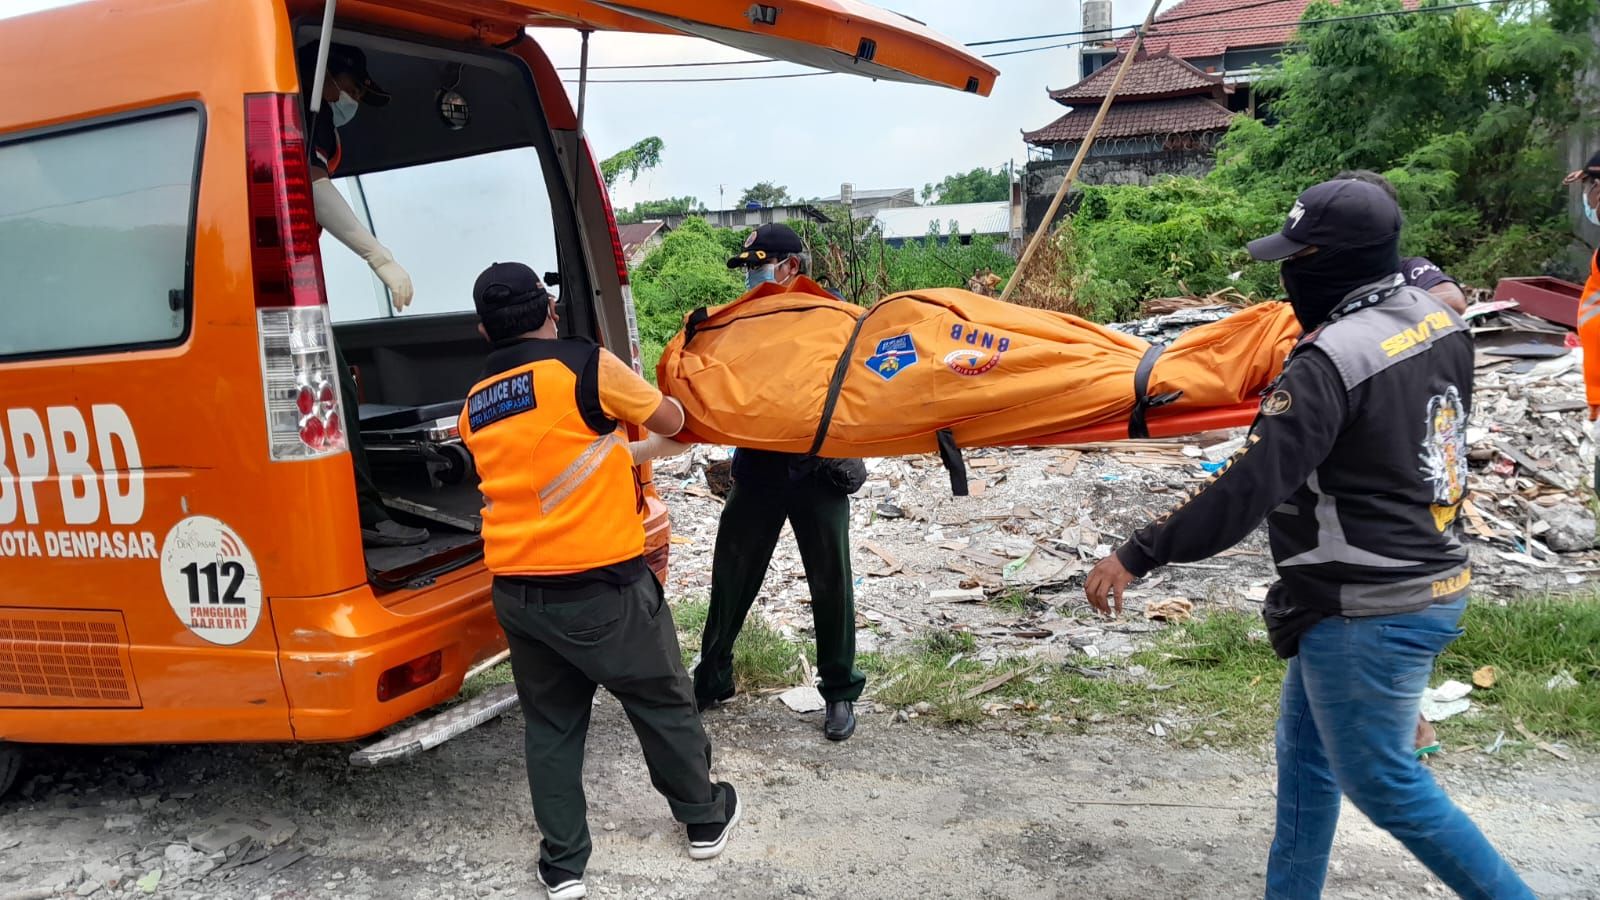 Seorang pemulung ditemukan meninggal dunia di sebuah rumah yang telah lama tak berpenghuni di Denpasar Utara.